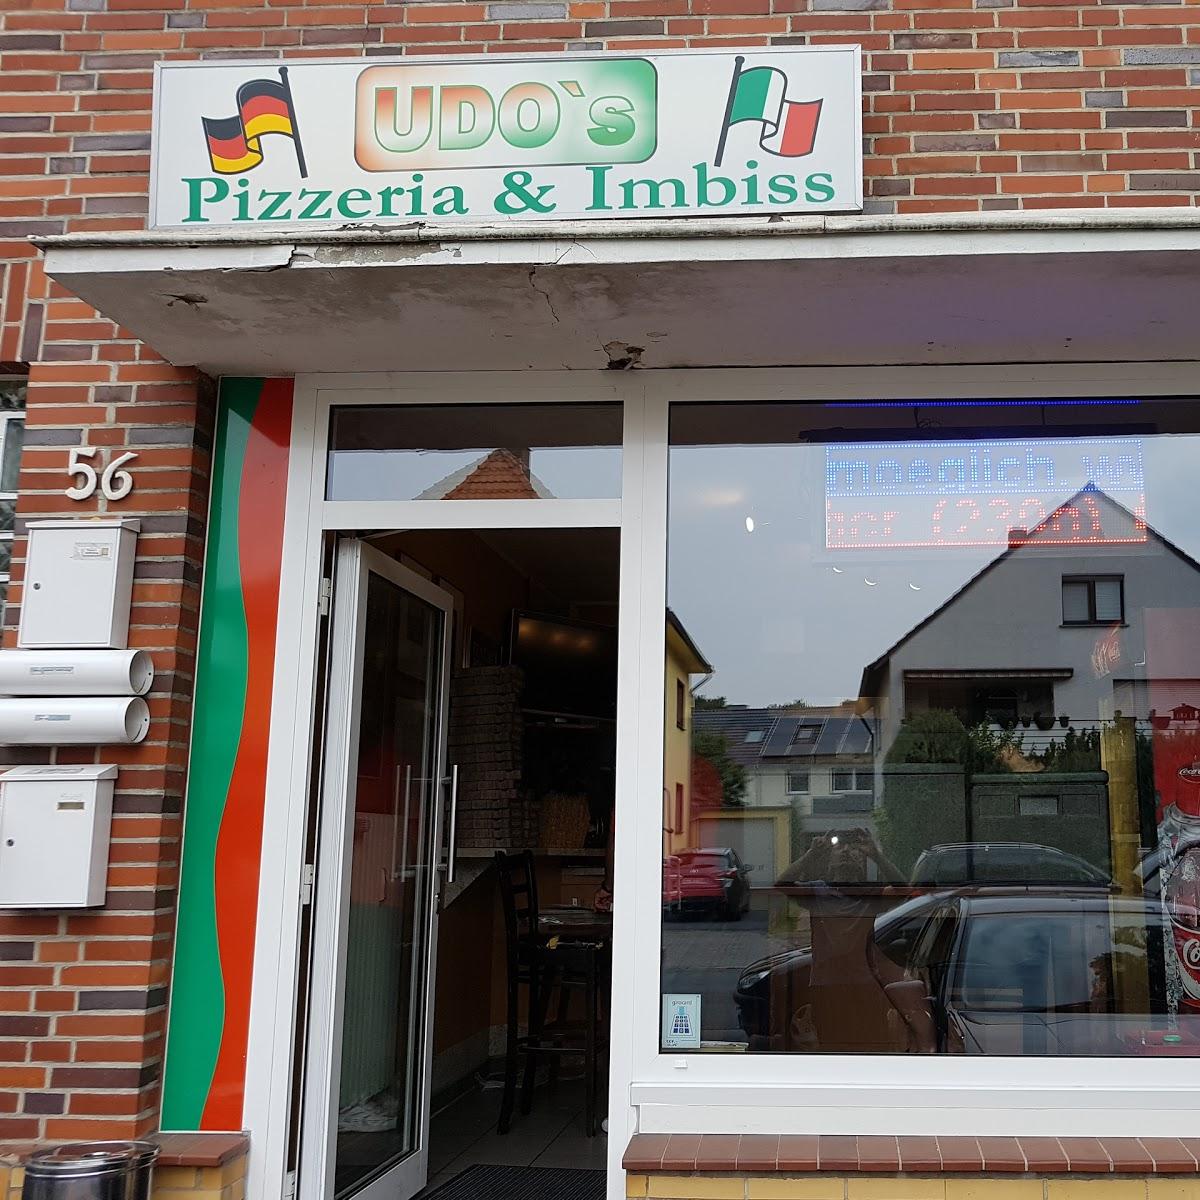 Restaurant "Udos Pizzeria & Imbiss" in Hamm